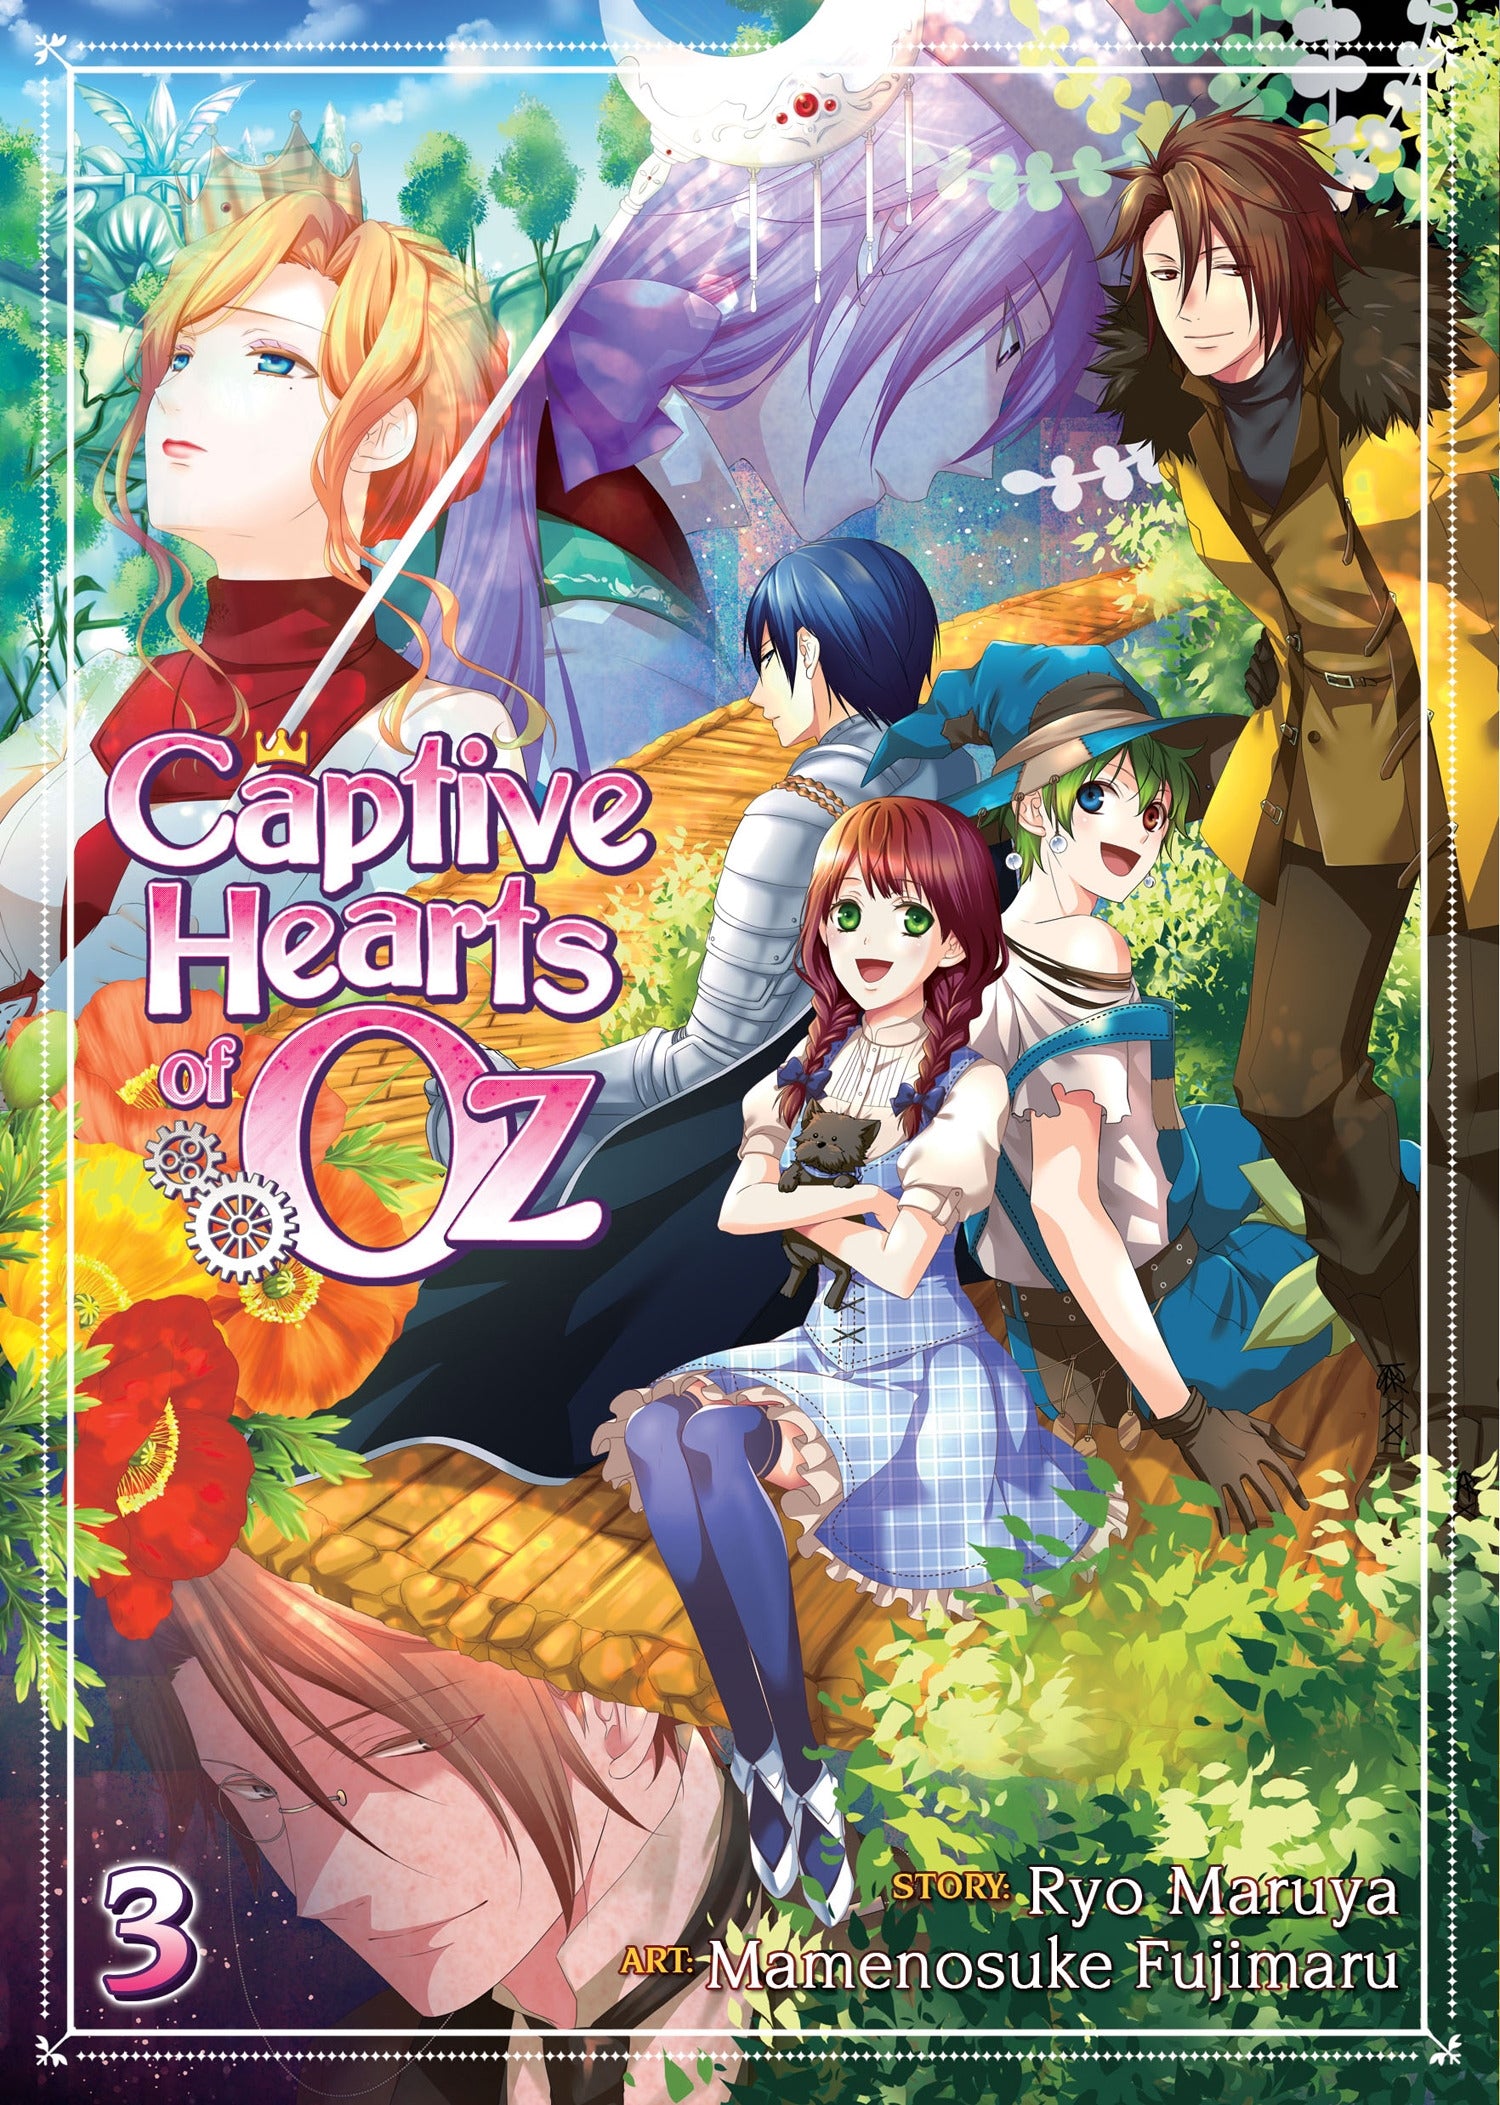 Captive Hearts of Oz Vol. 3 - Manga Warehouse